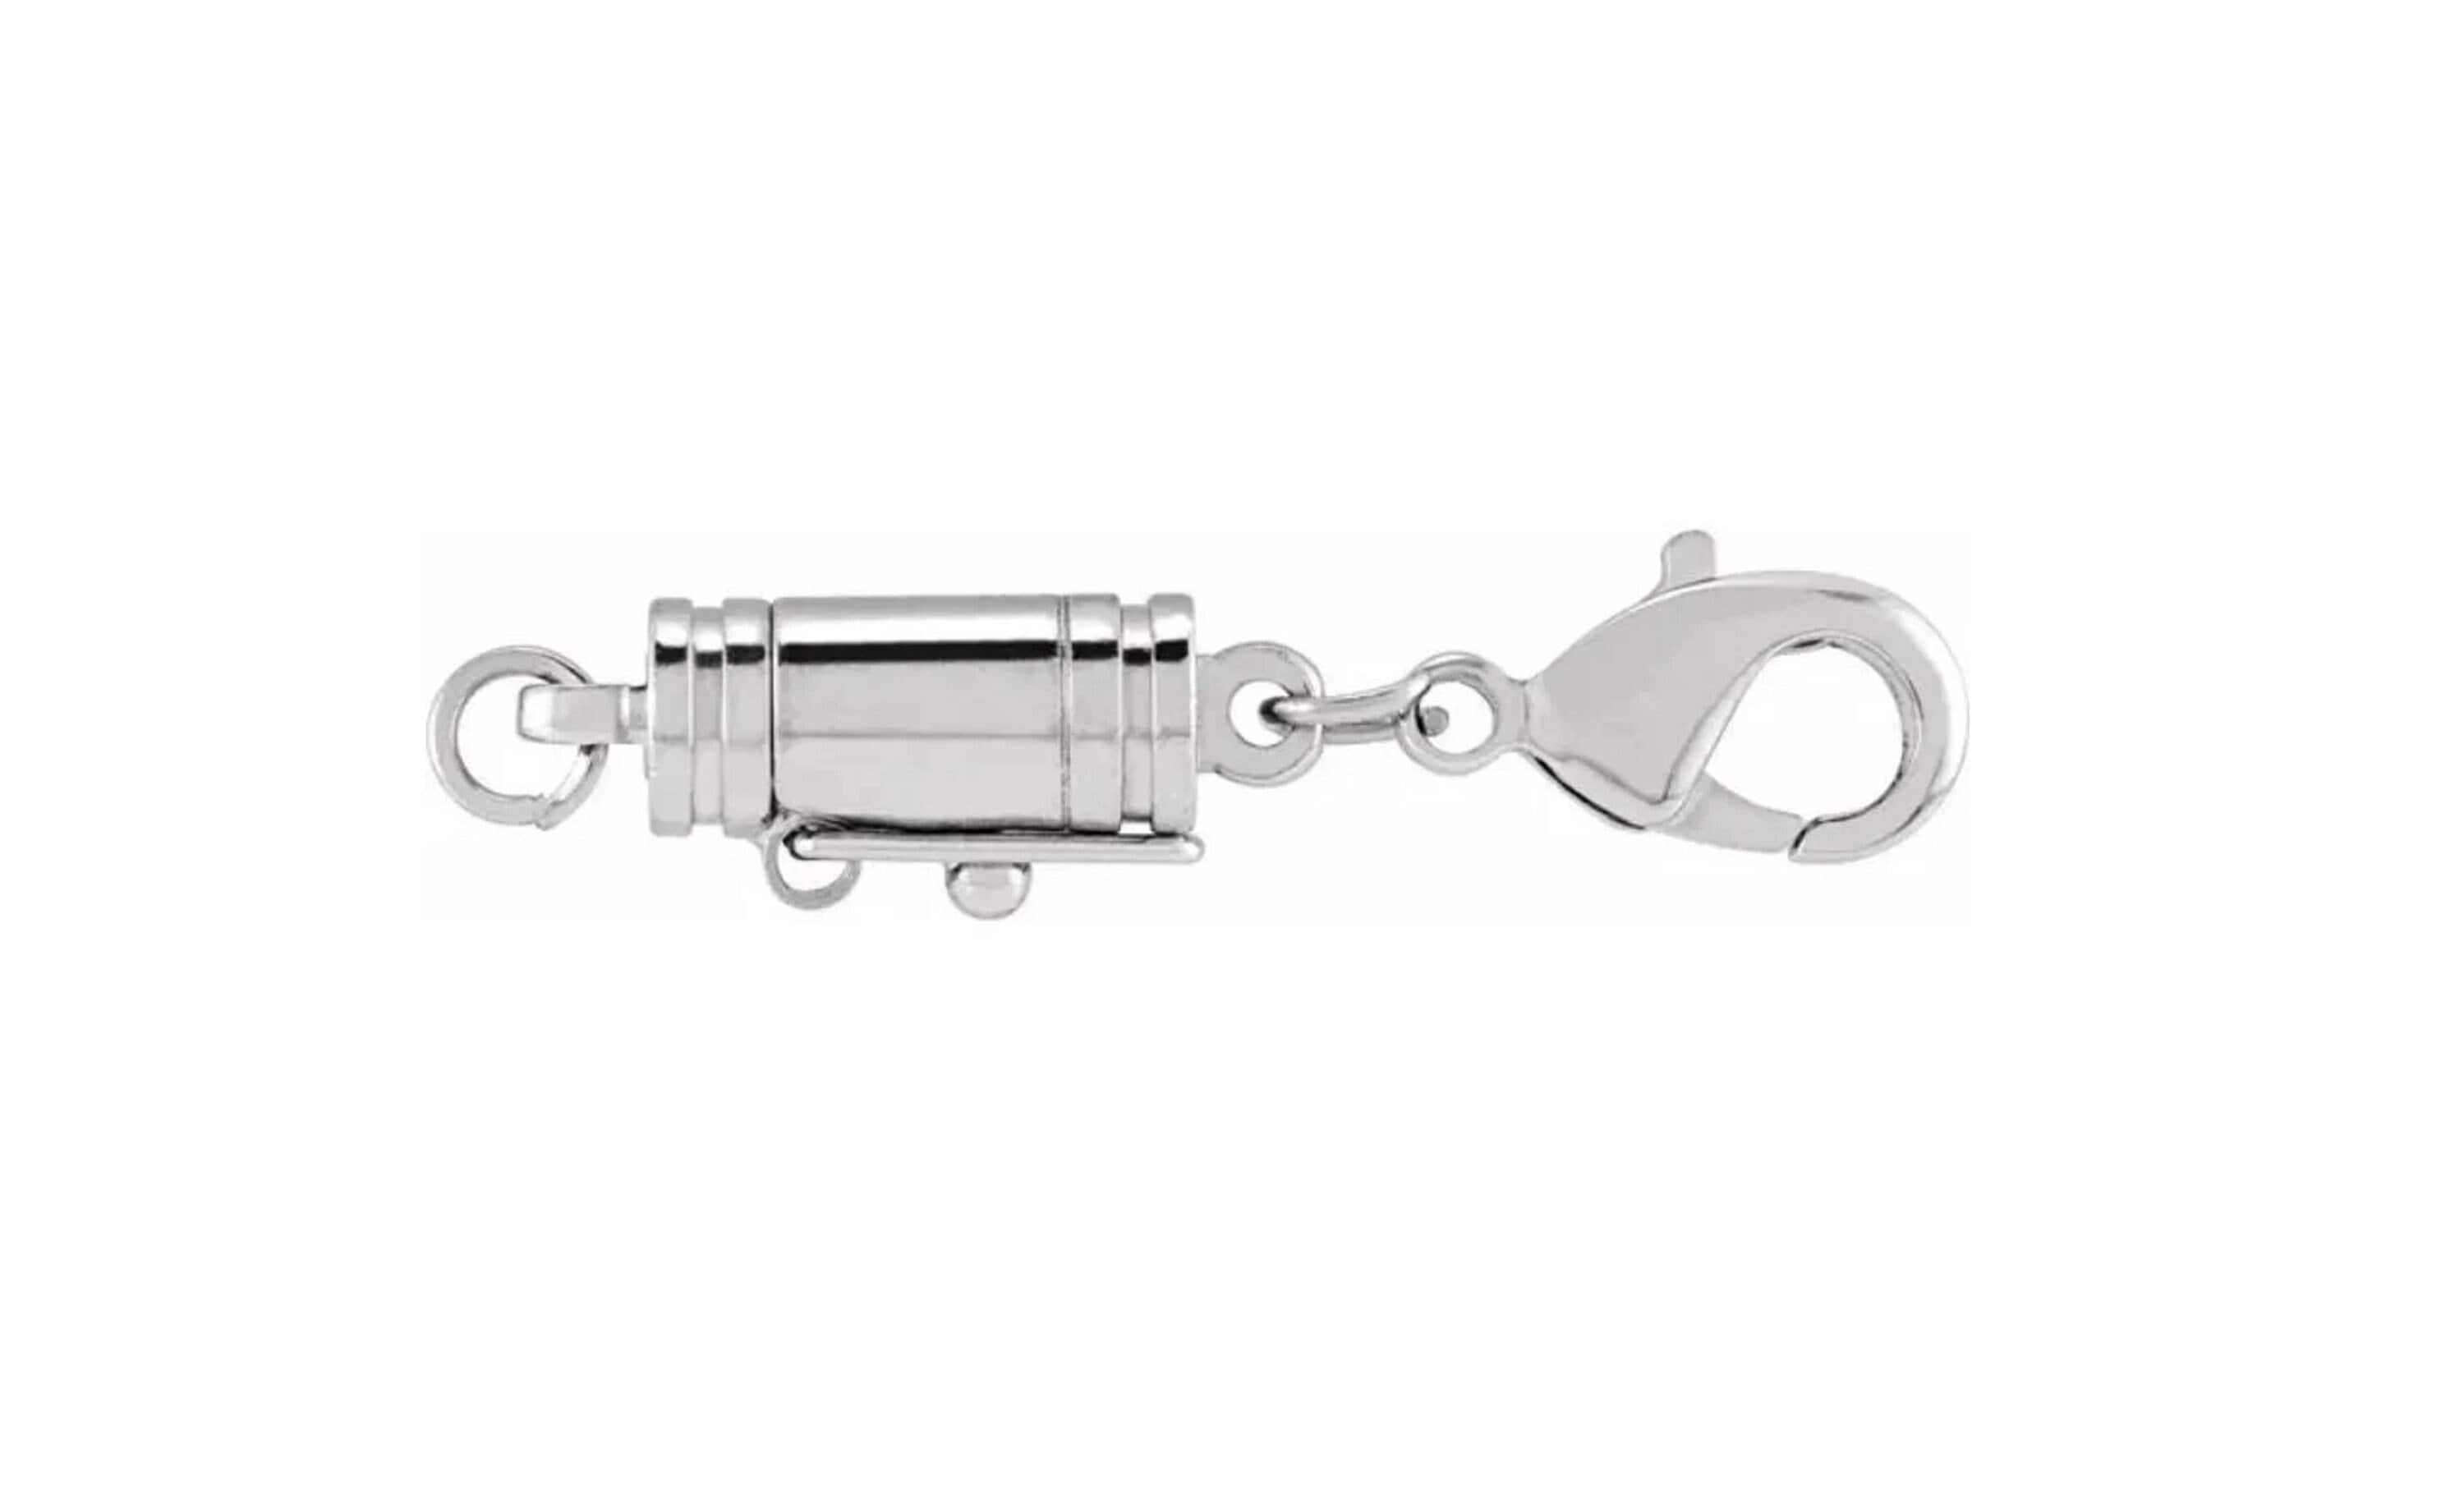 1 Piece Magnetic Clasps for Bracelet Making 8mmx3mm Inner Mechanism Lock  for 8mm Flat Band Bracelet Closure